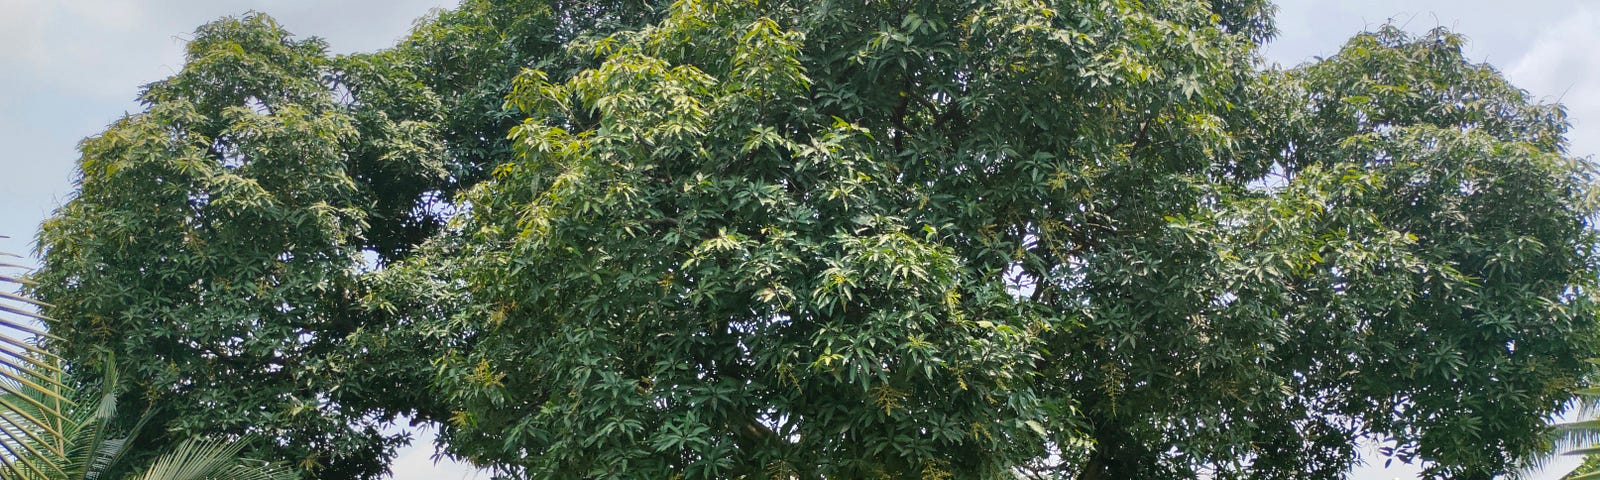 large green deciduoous tree